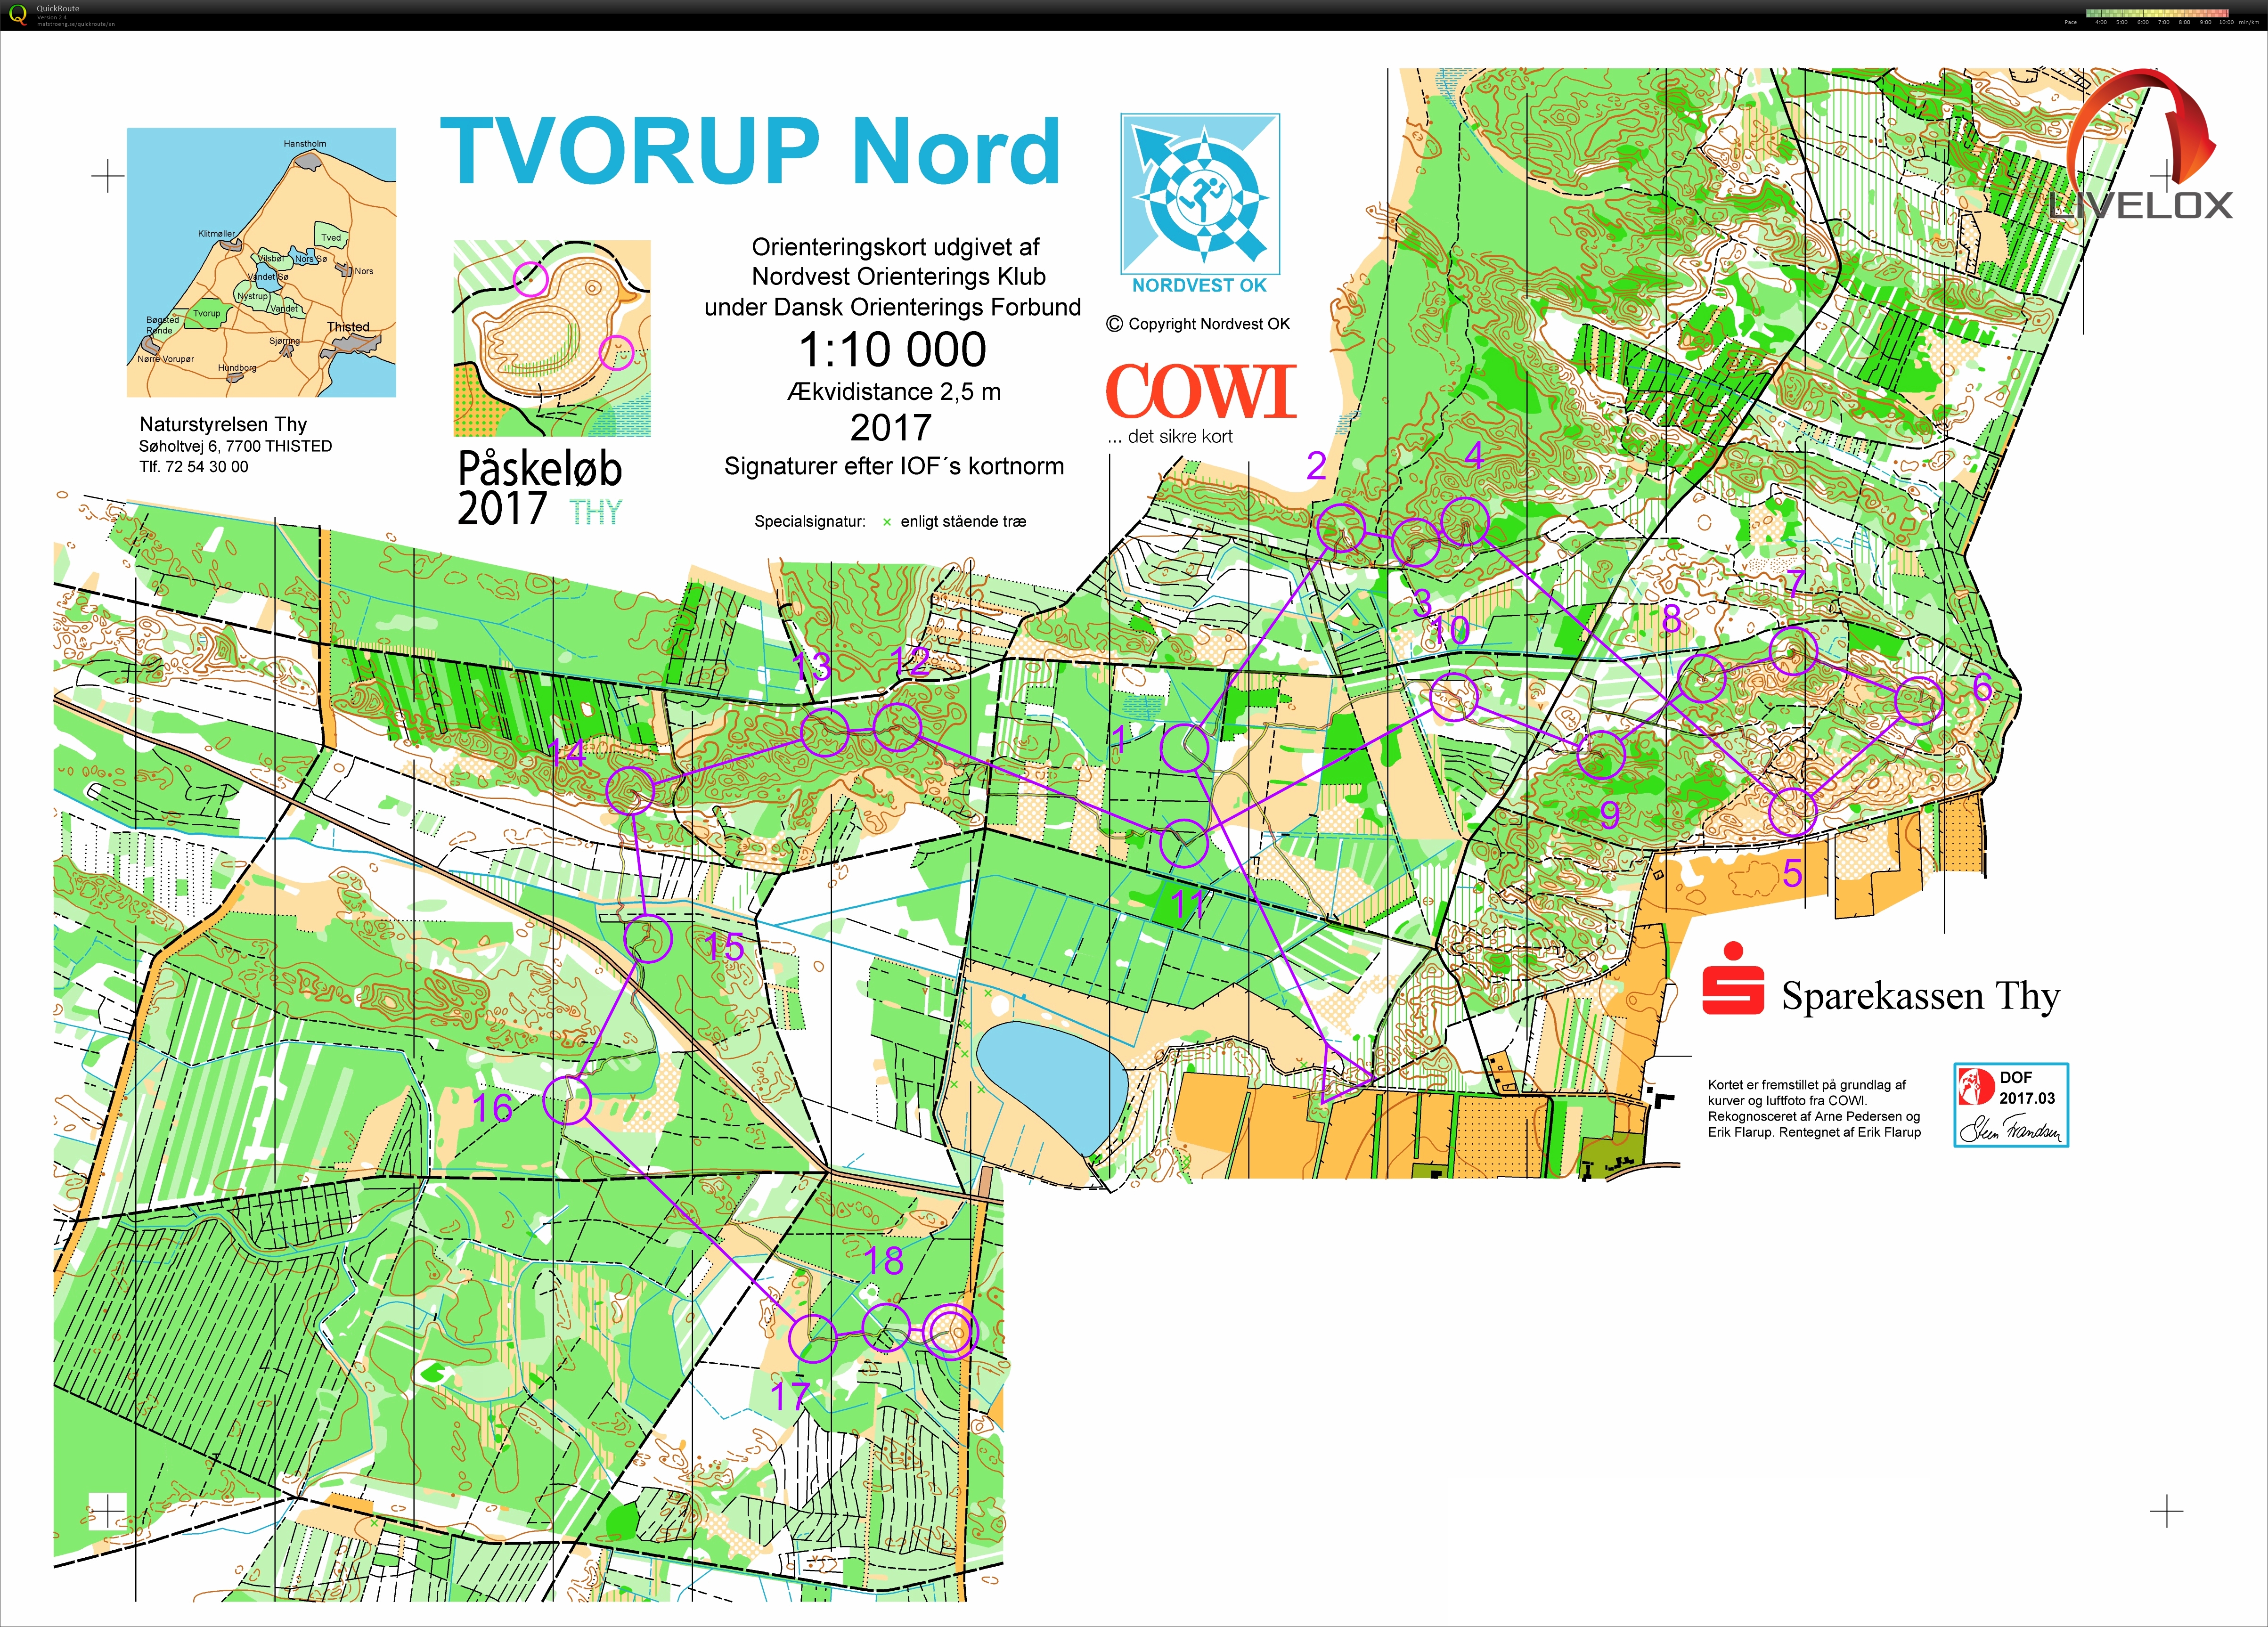 Tvorup Nord påskeløb 2017 etape 2 - H21AK (14.04.2017)